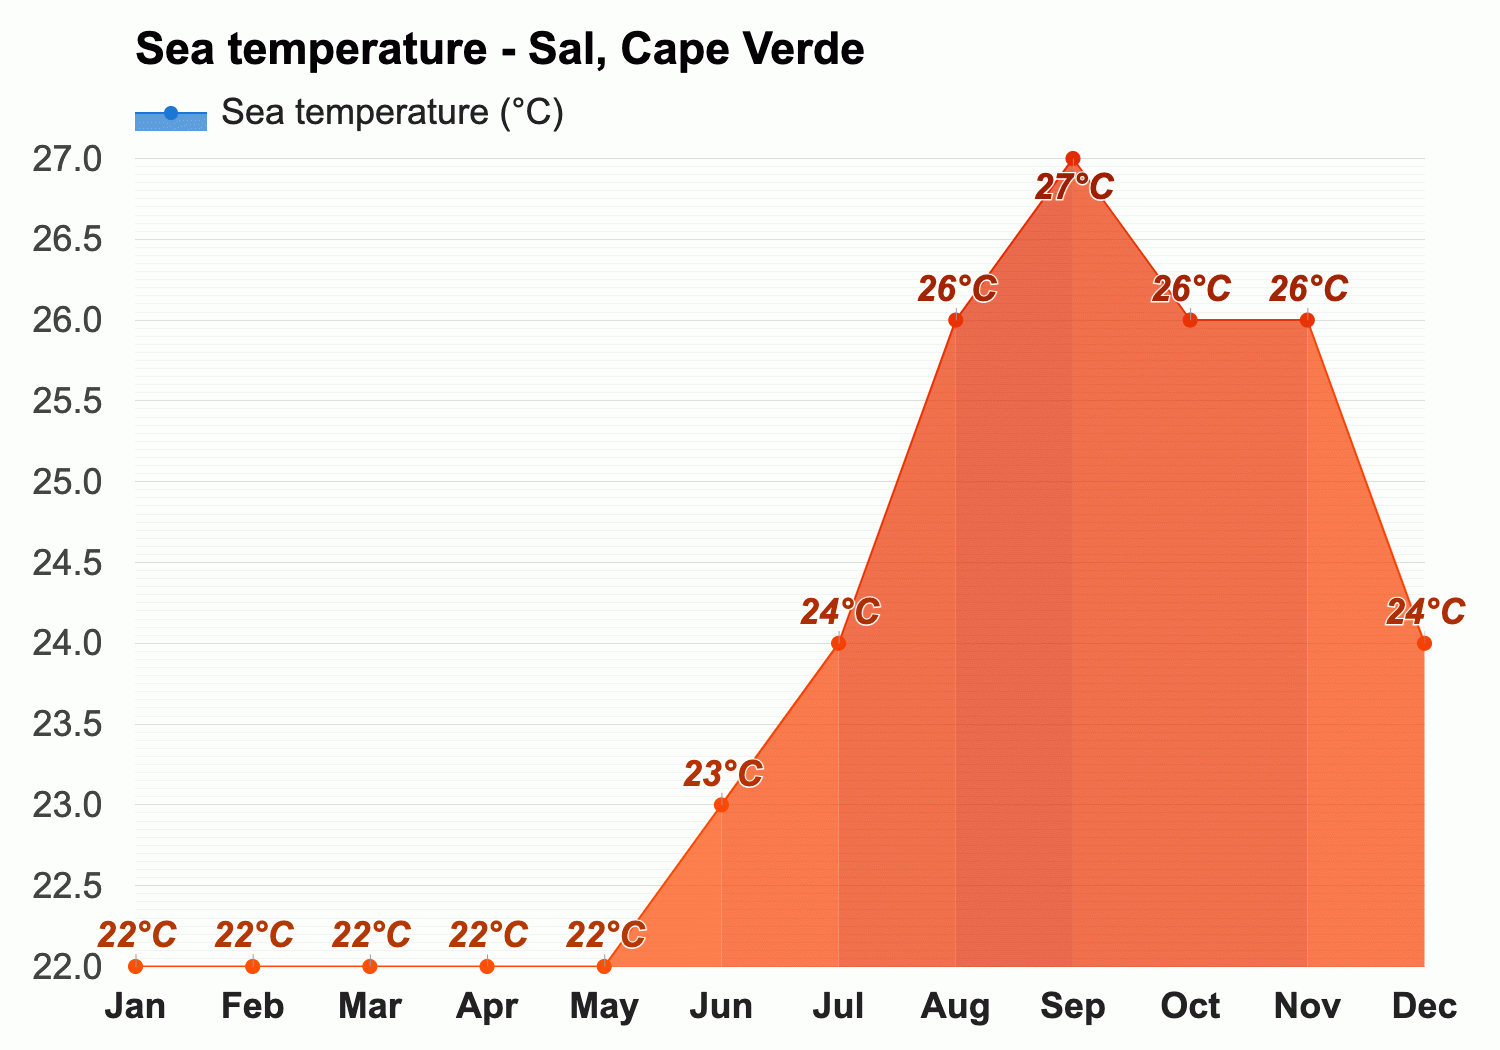 June Weather forecast - Summer forecast - Sal, Cape Verde